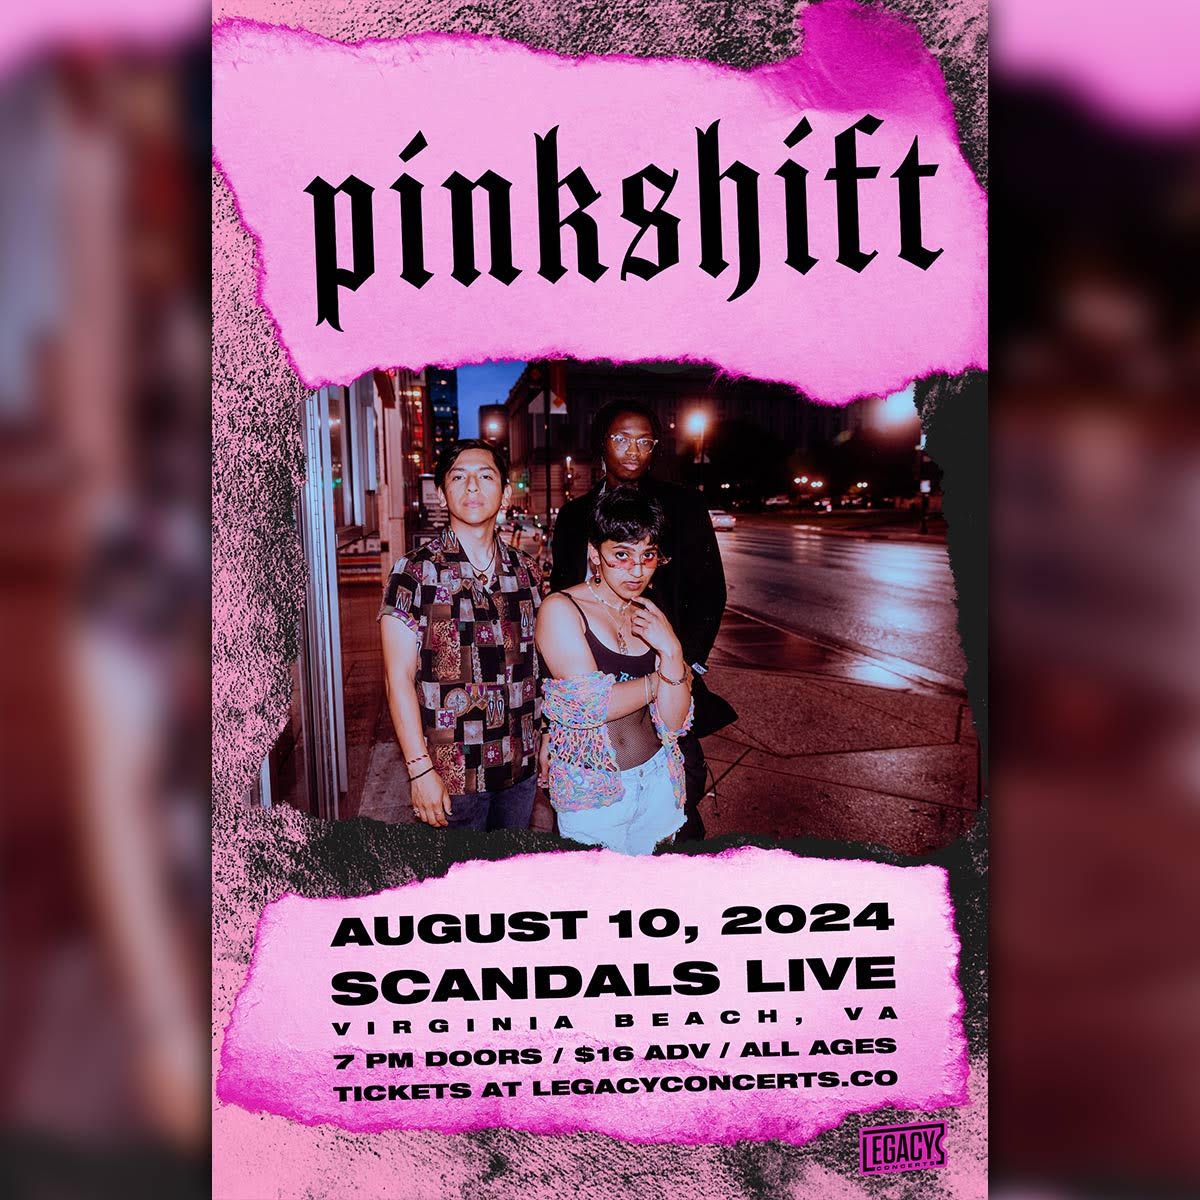 Pinkshift at Scandals Live